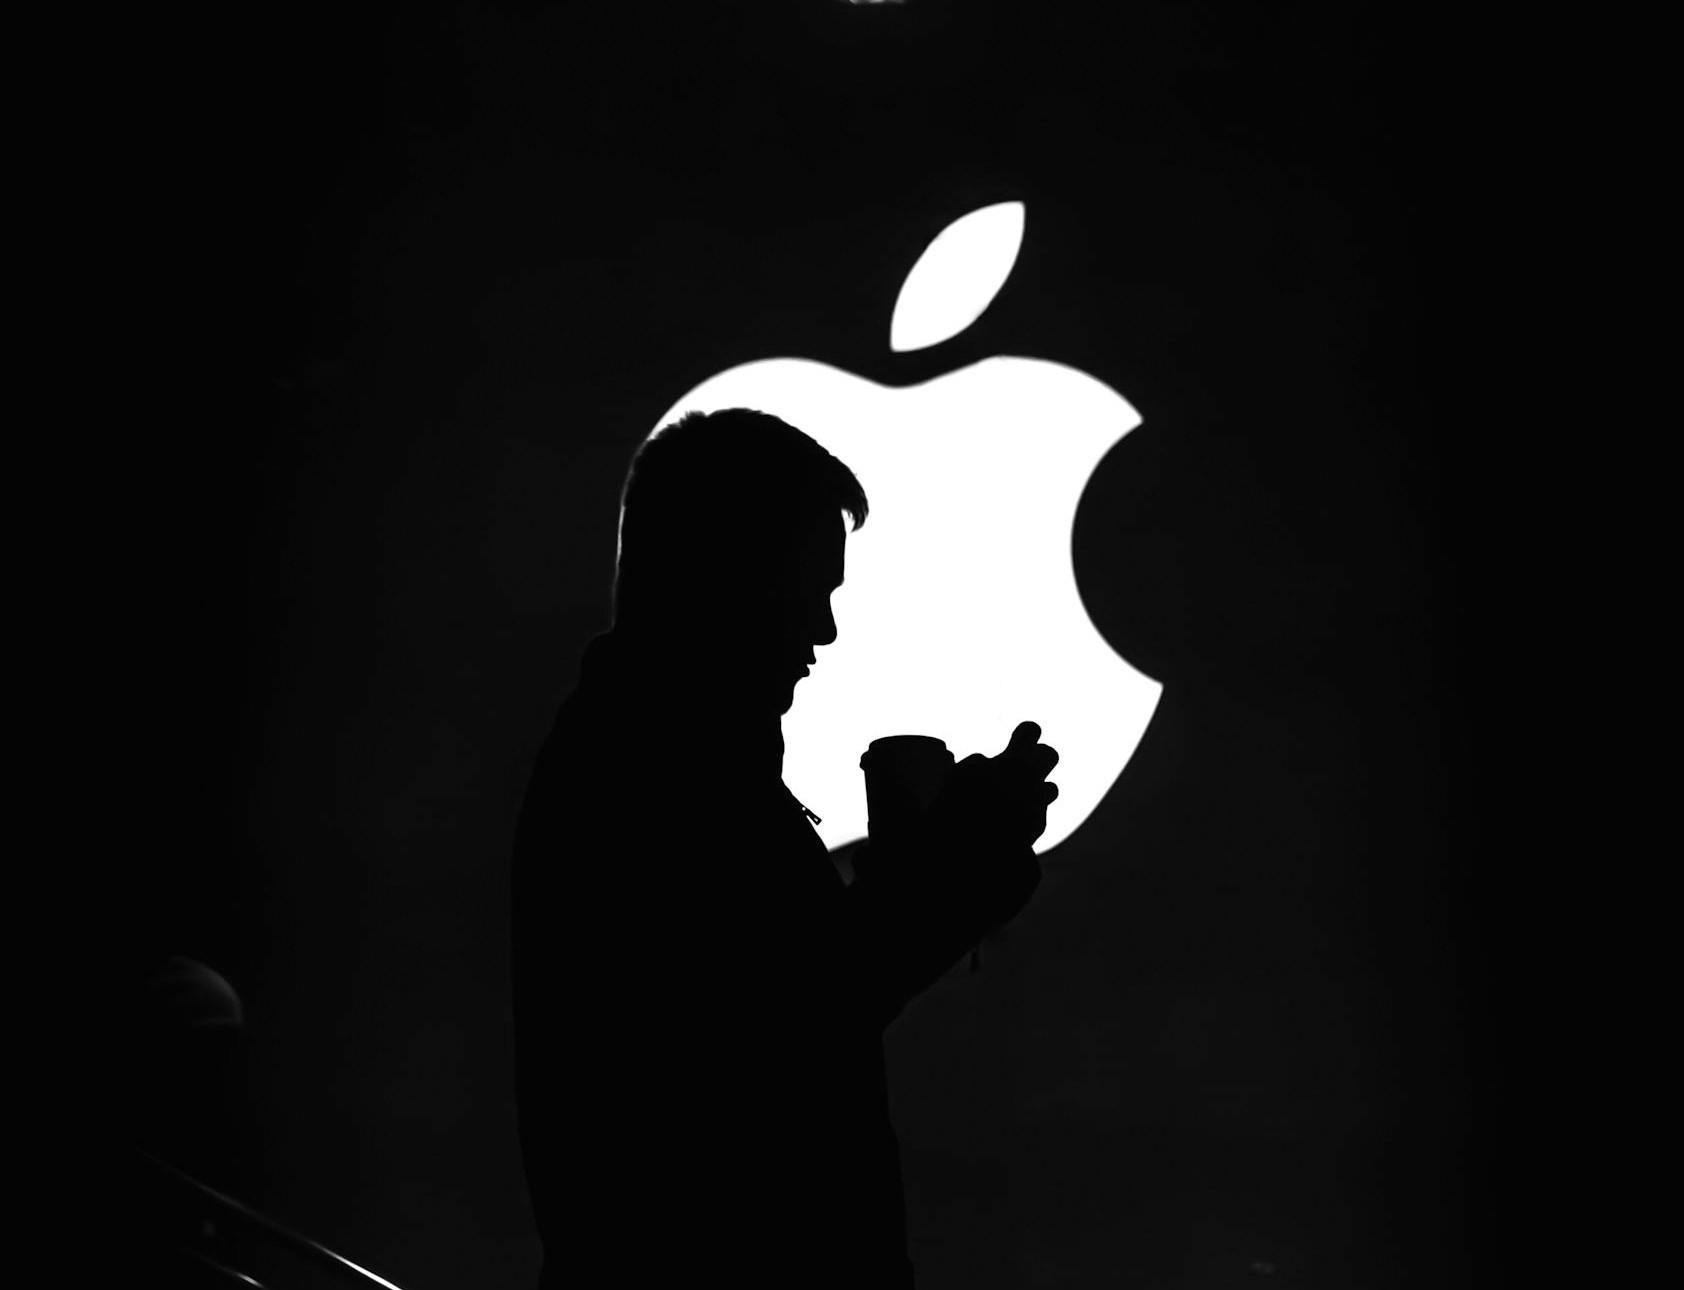 Logo d'Apple